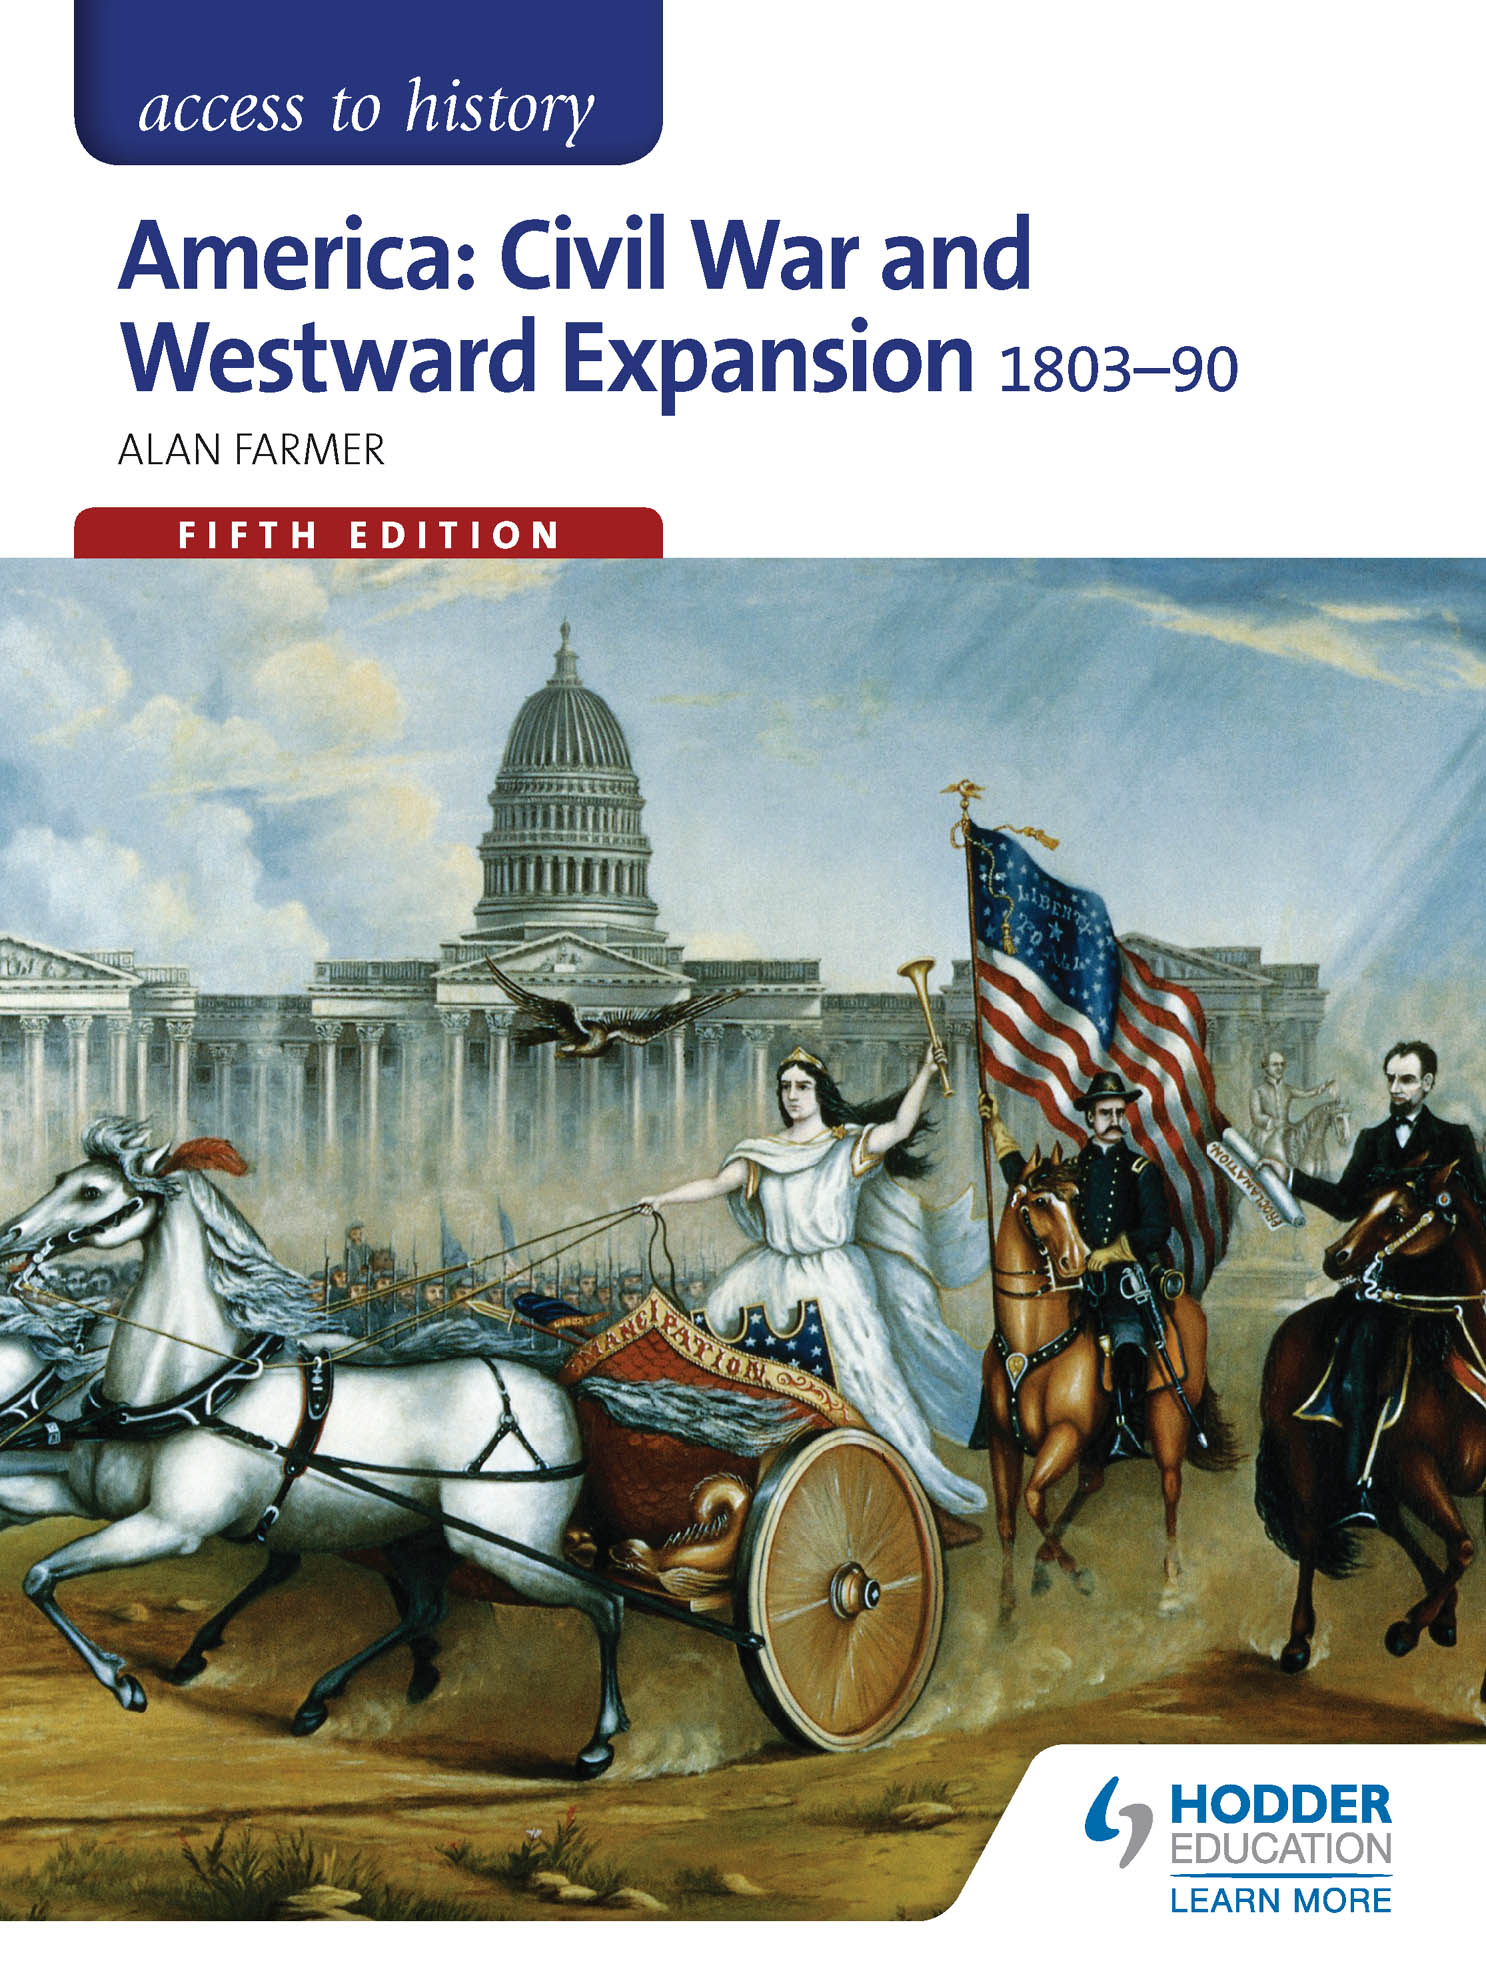 [DESCATALOGADO] Access to History America Civil War and Westward Expansion 1803-1890 Fifth Edition